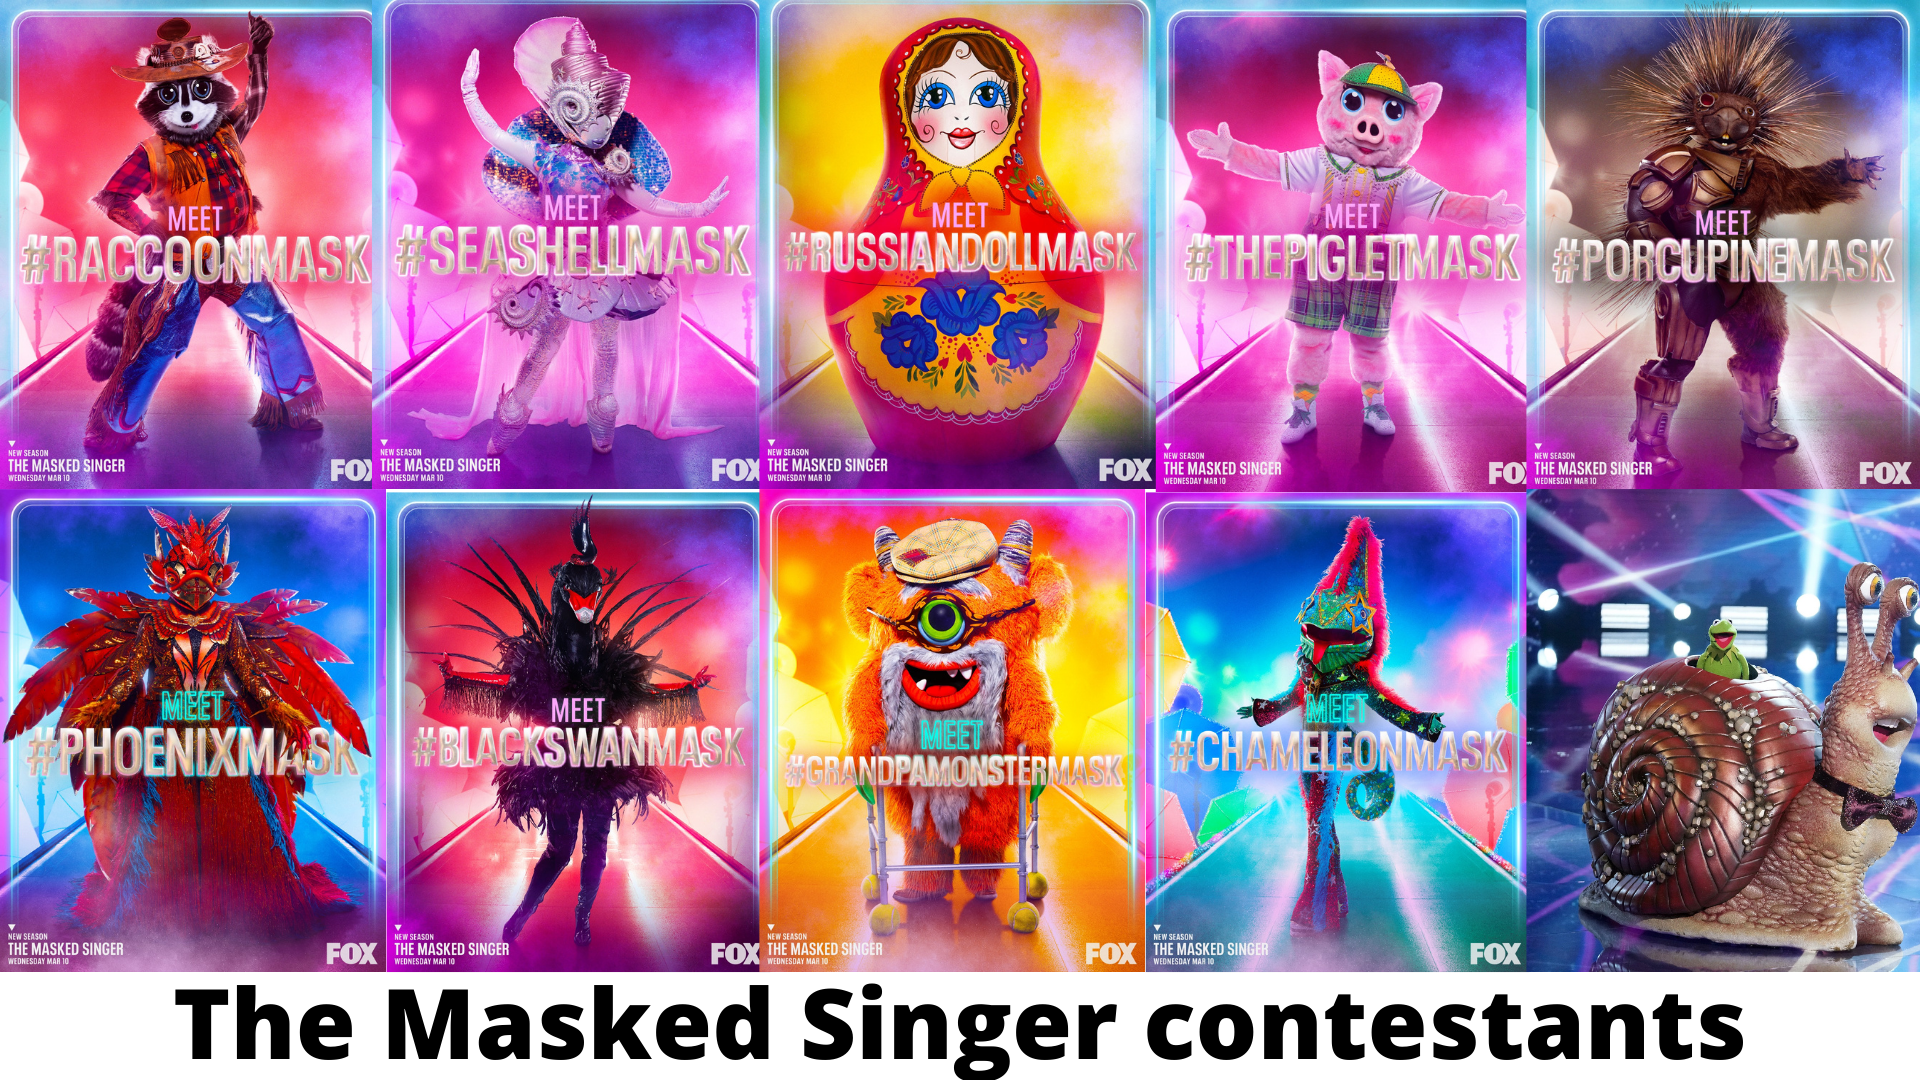 The masked singer season 5